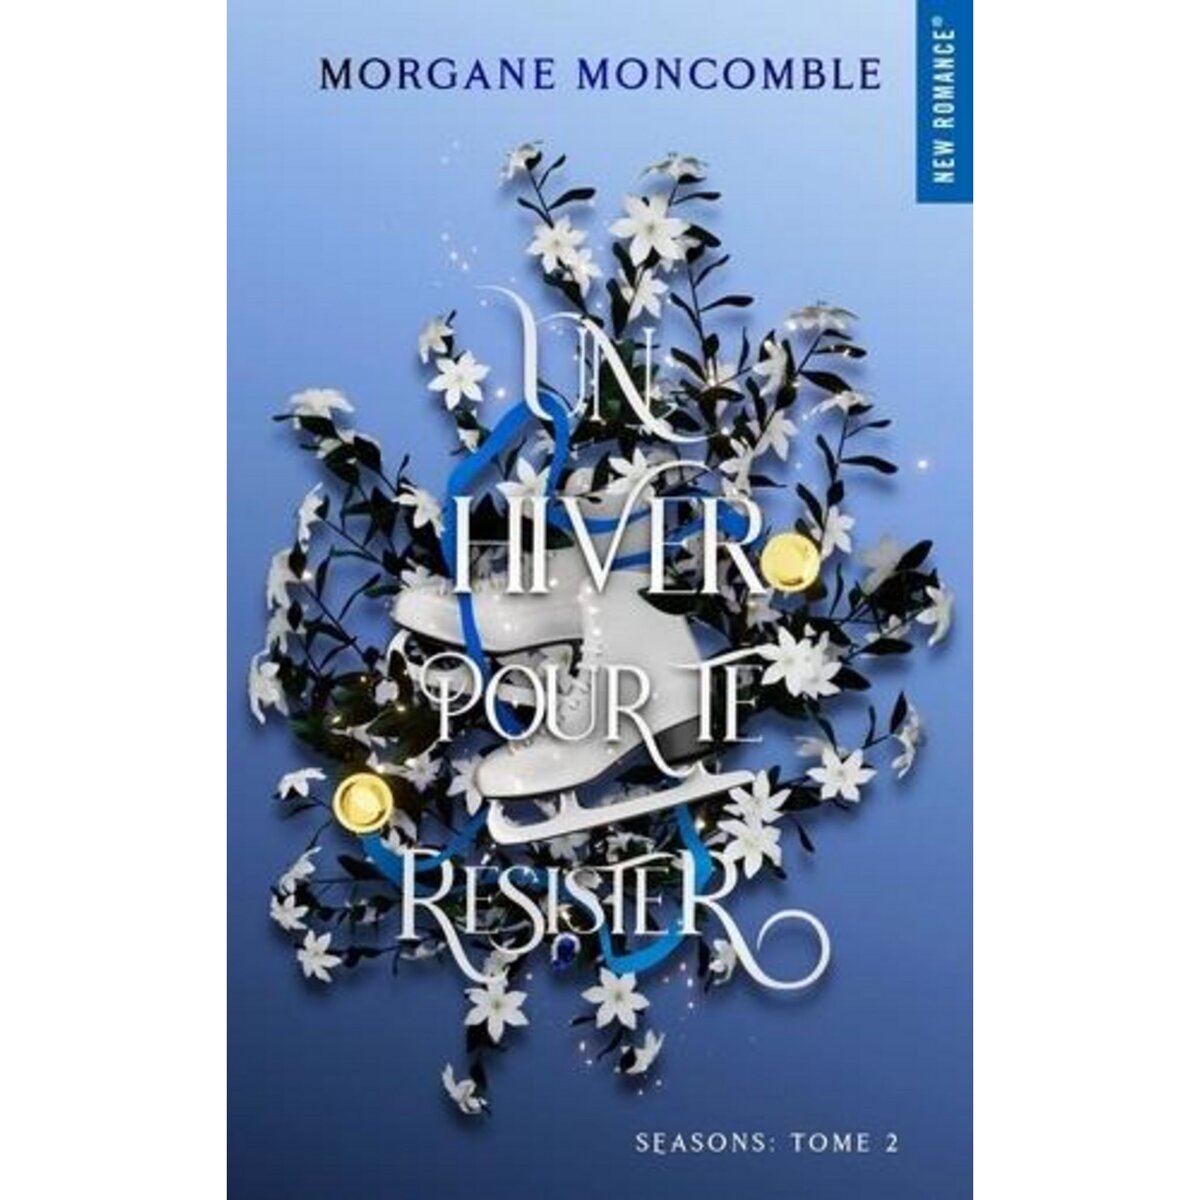  SEASONS TOME 2 : UN HIVER POUR TE RESISTER, Moncomble Morgane